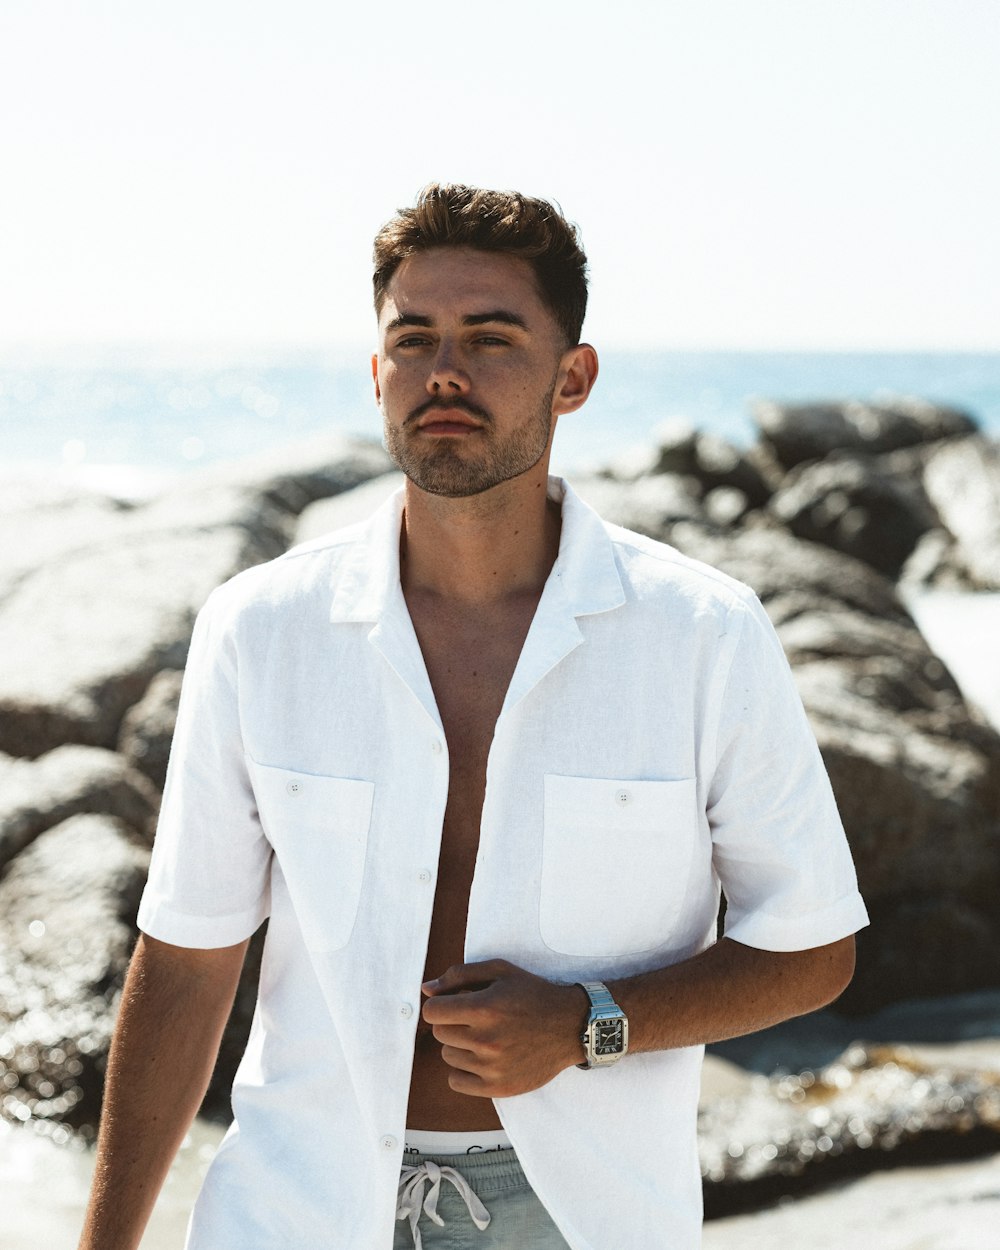 a man in a white shirt standing on a beach